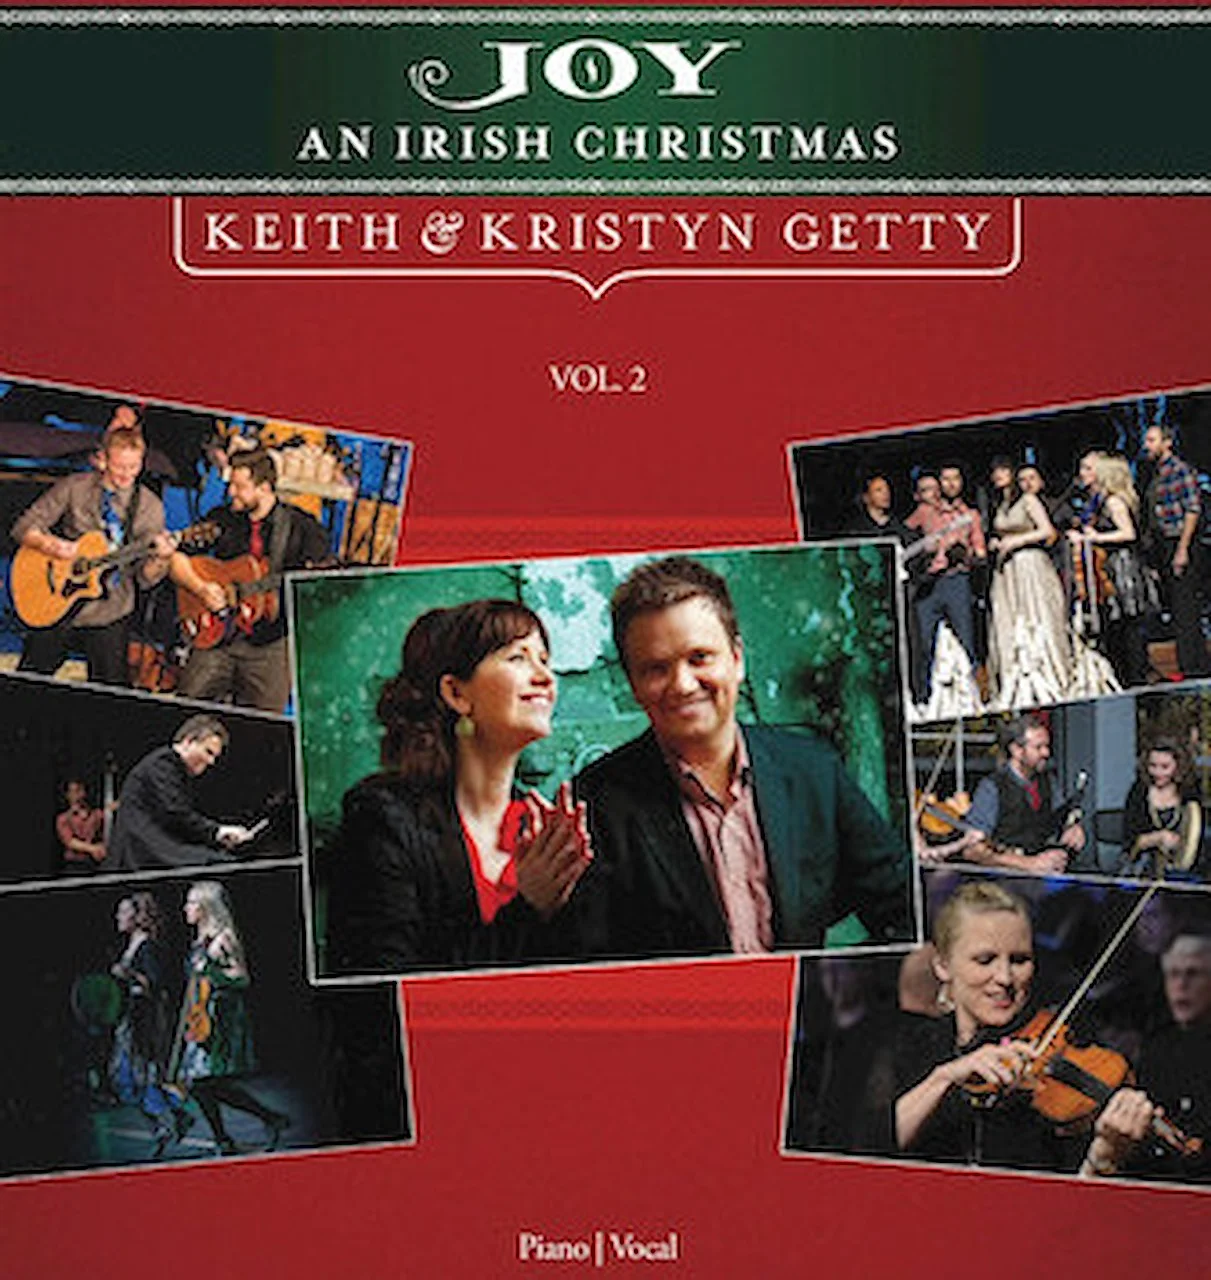 Keith and Kristyn Getty Joy an Irish Christmas Volume 2 Sacred Folio